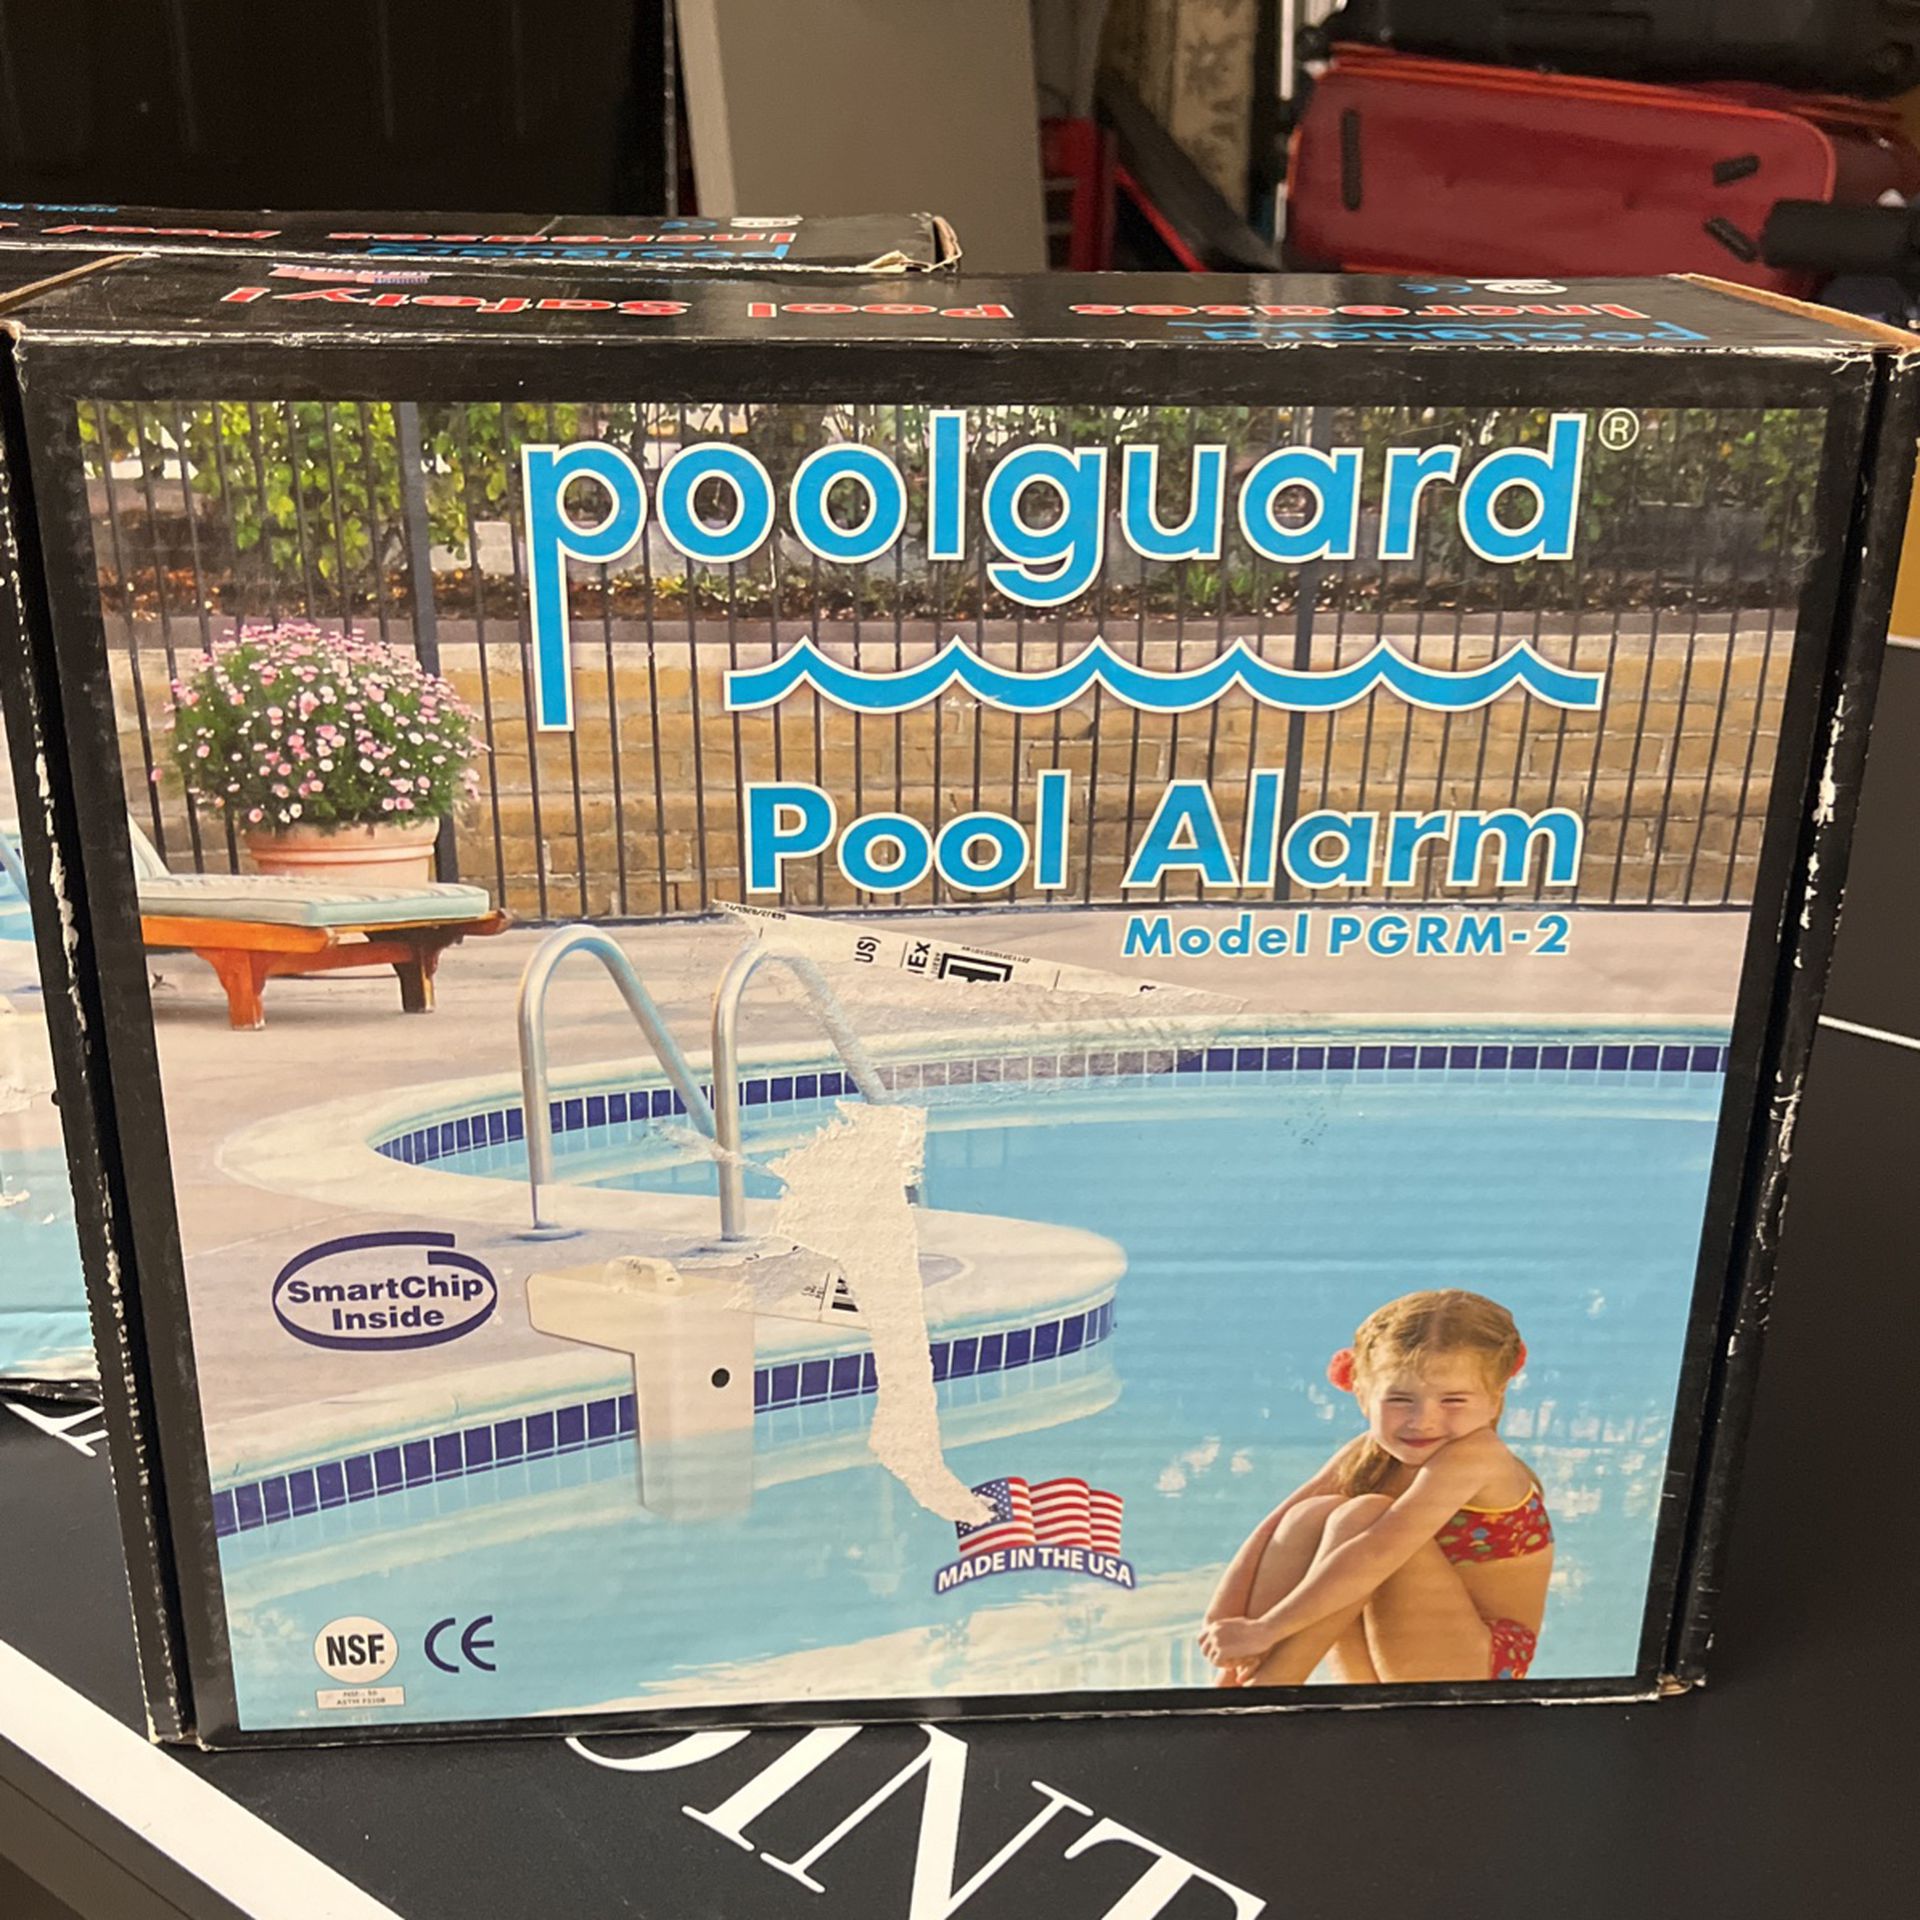 Pool Guard Alarm